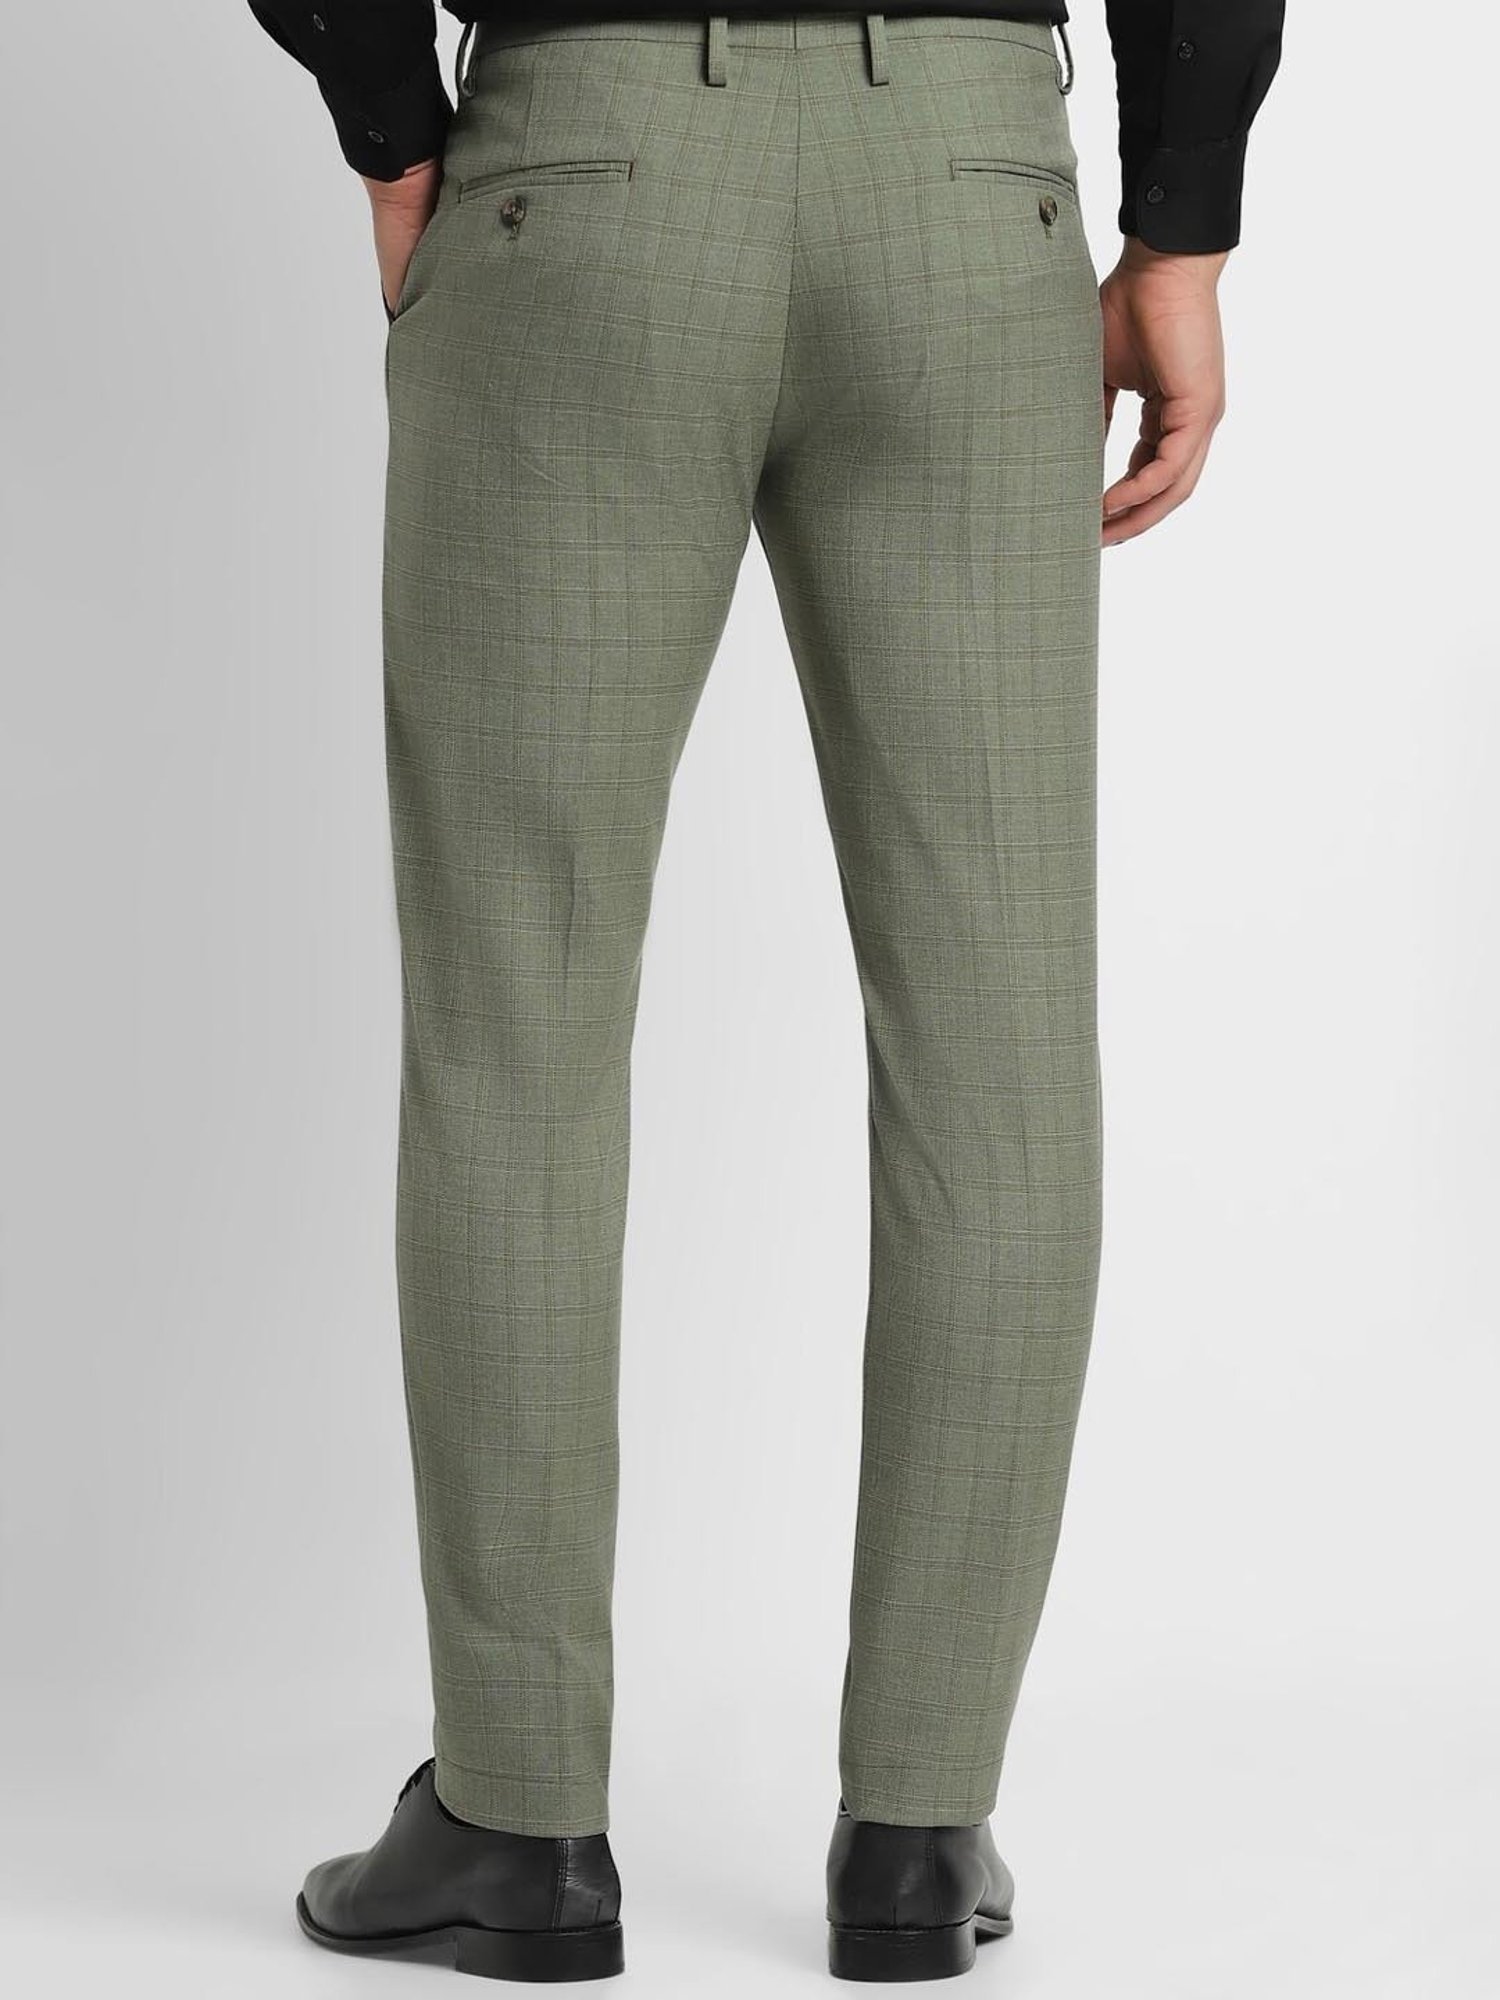 Buy Peter England Men Slim Fit Formal Trousers - Trousers for Men 22245716  | Myntra